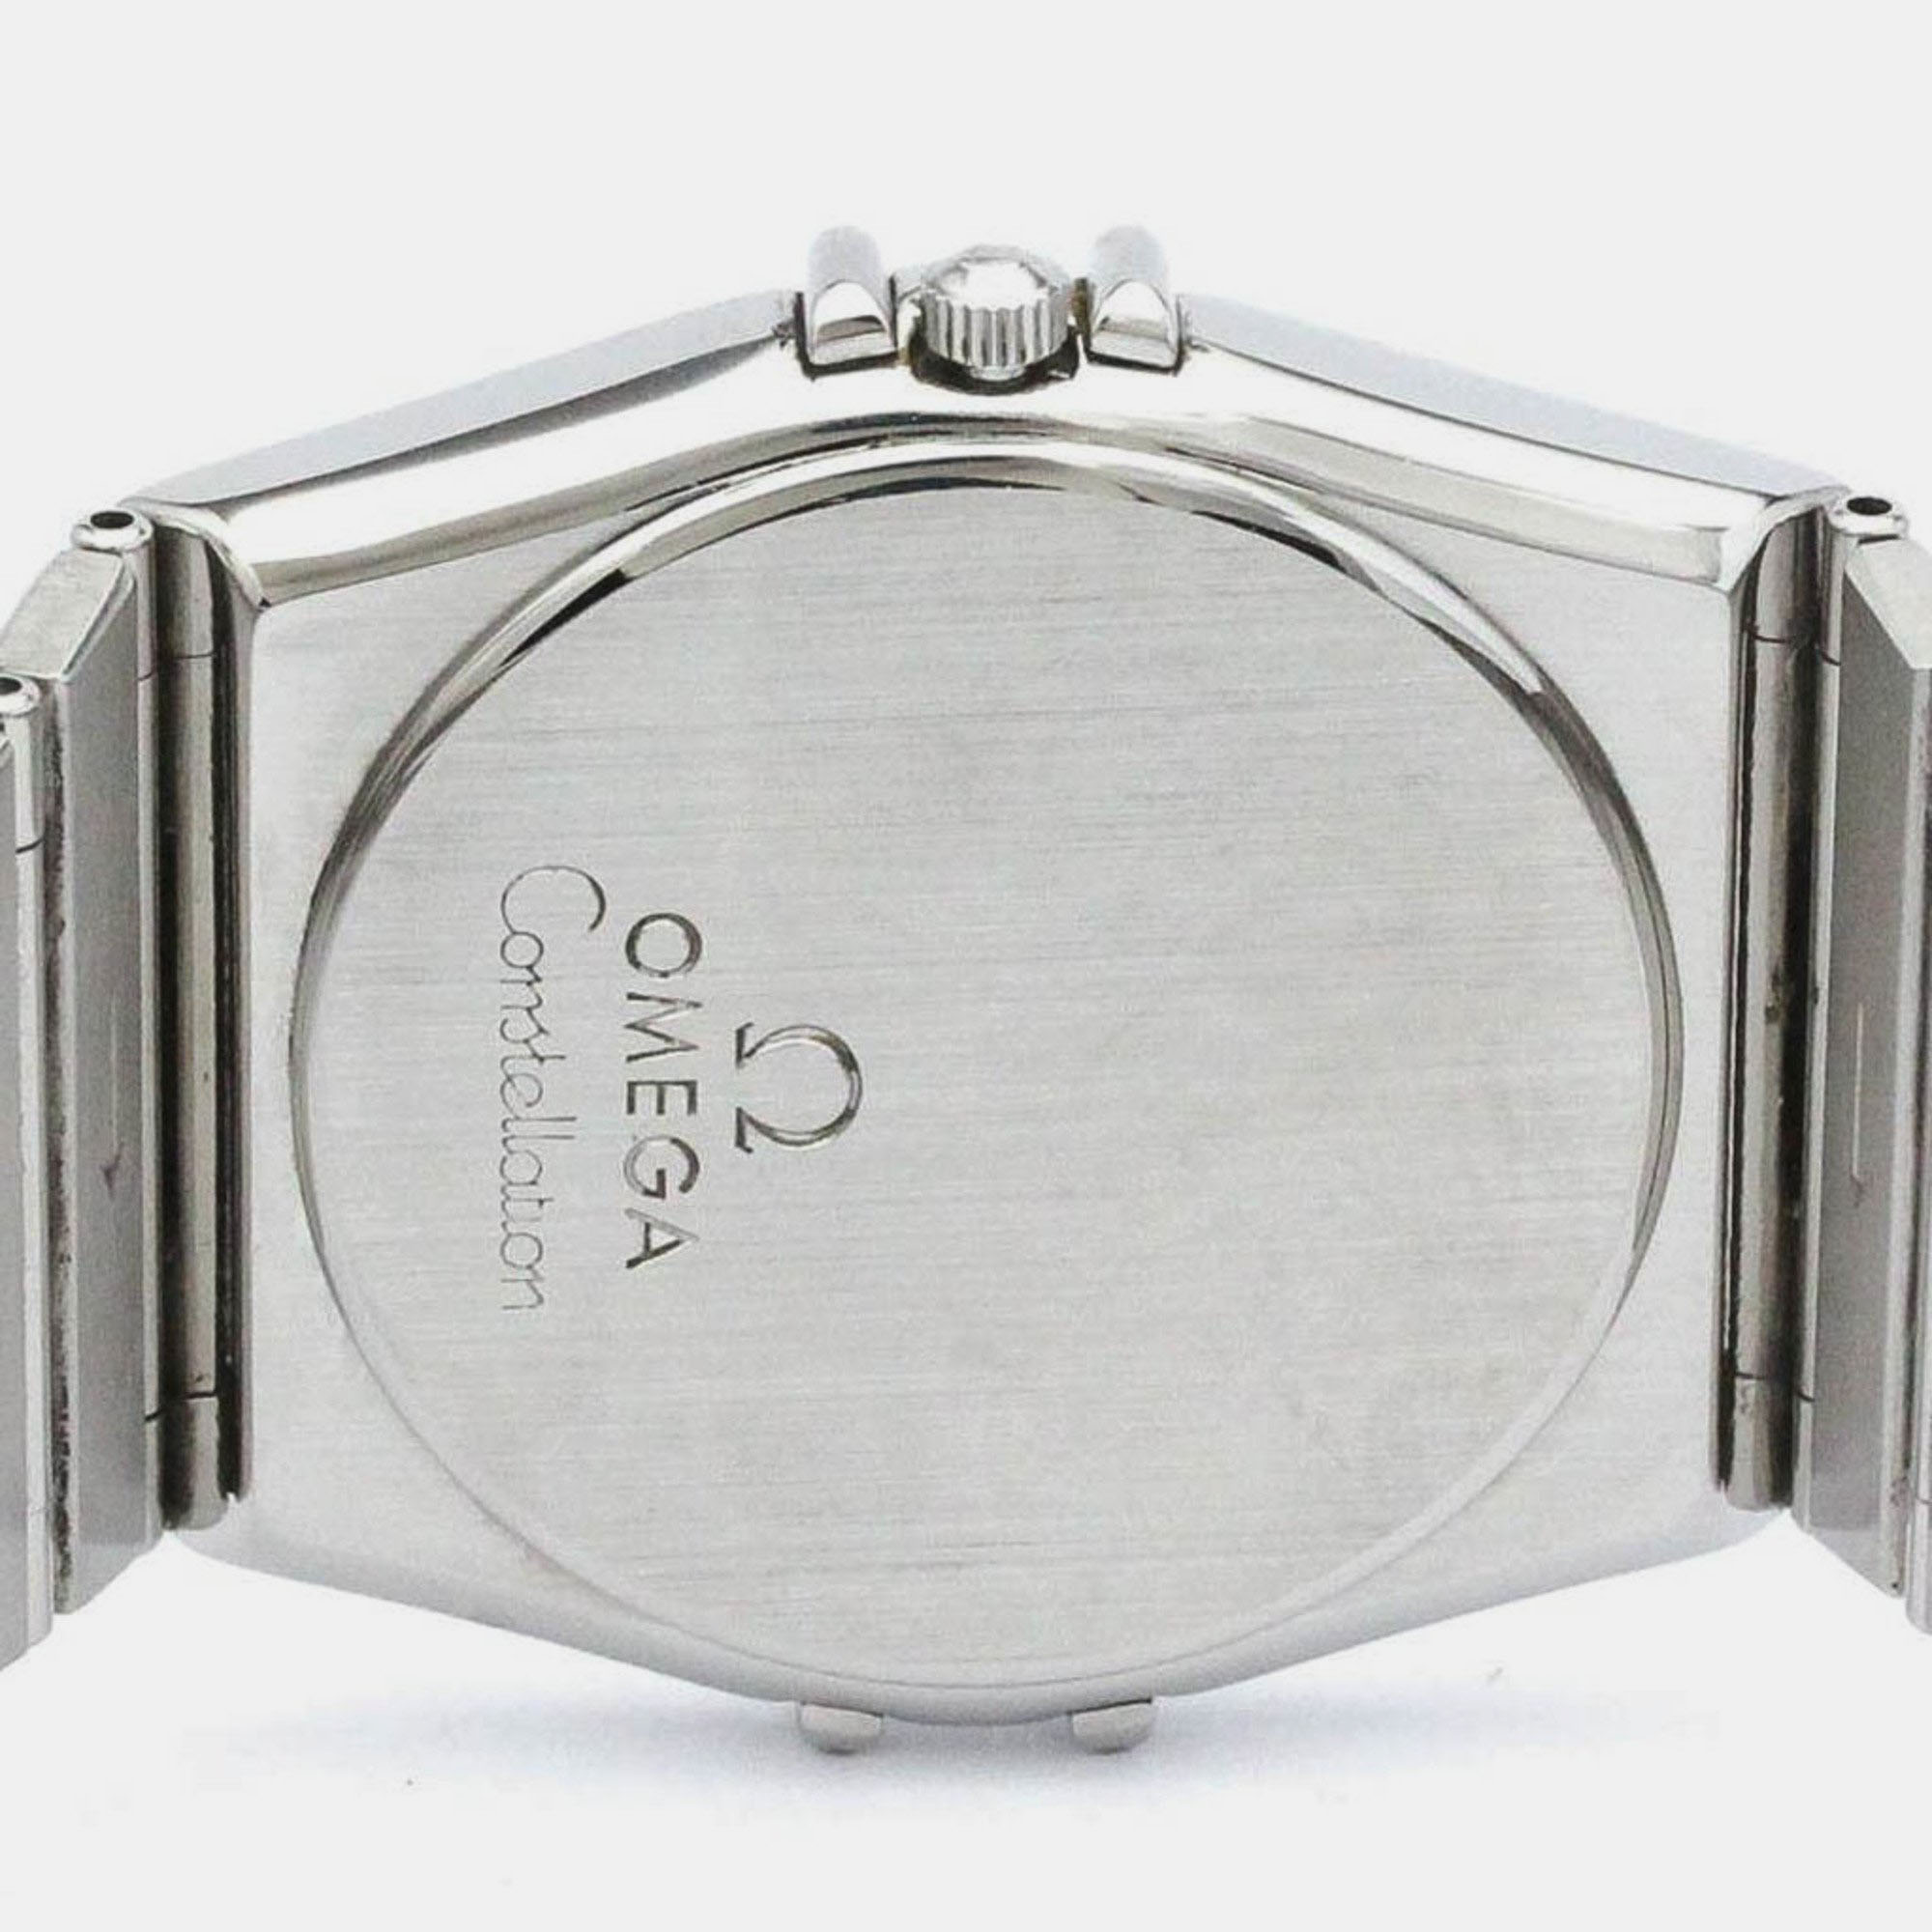 Omega Silver Stainless Steel Constellation 396.1070 Quartz Men's Wristwatch 35 Mm